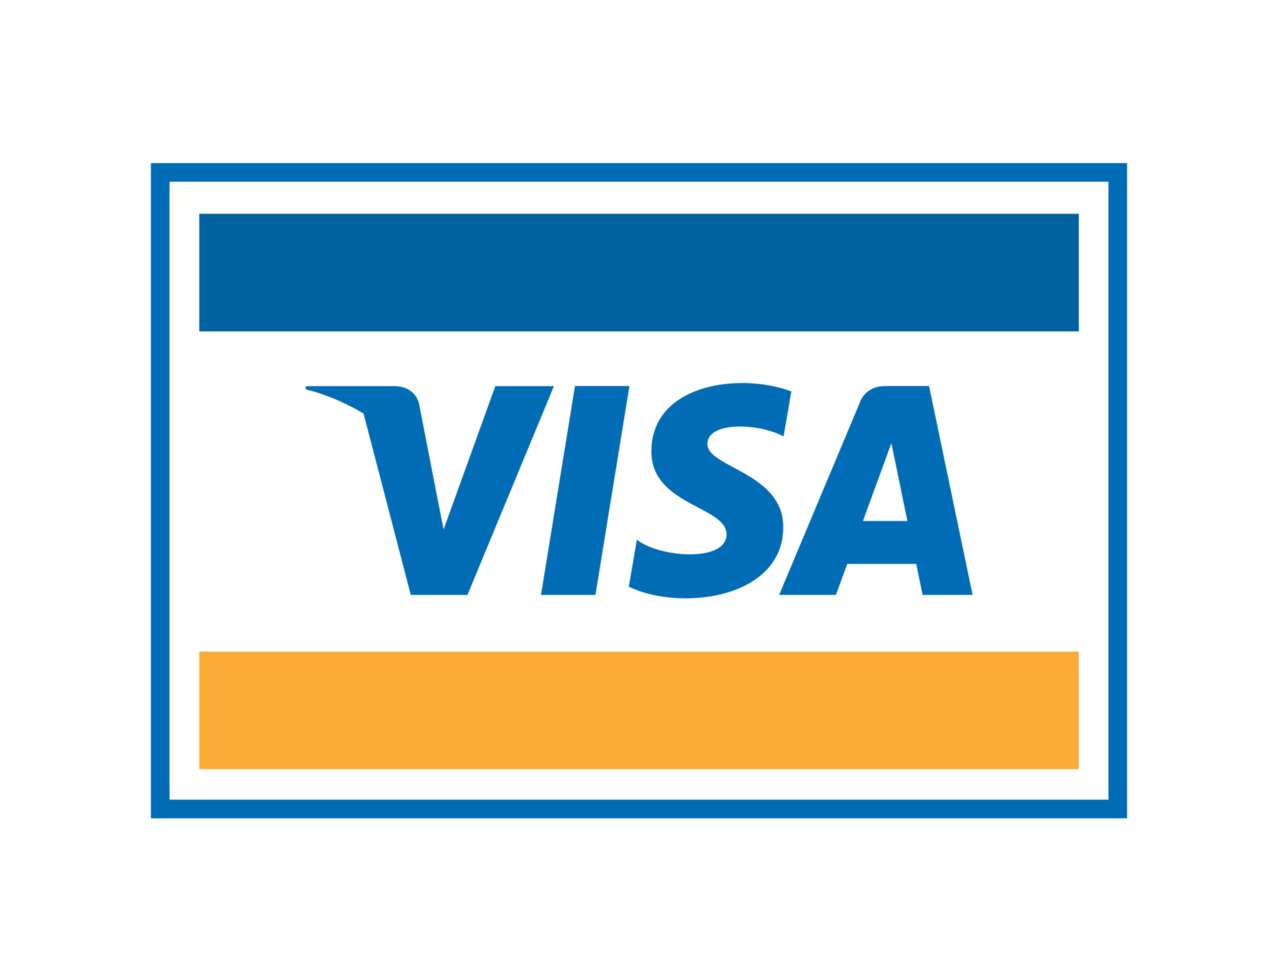 Visa logo png, Visa icon transparent png 20975572 PNG